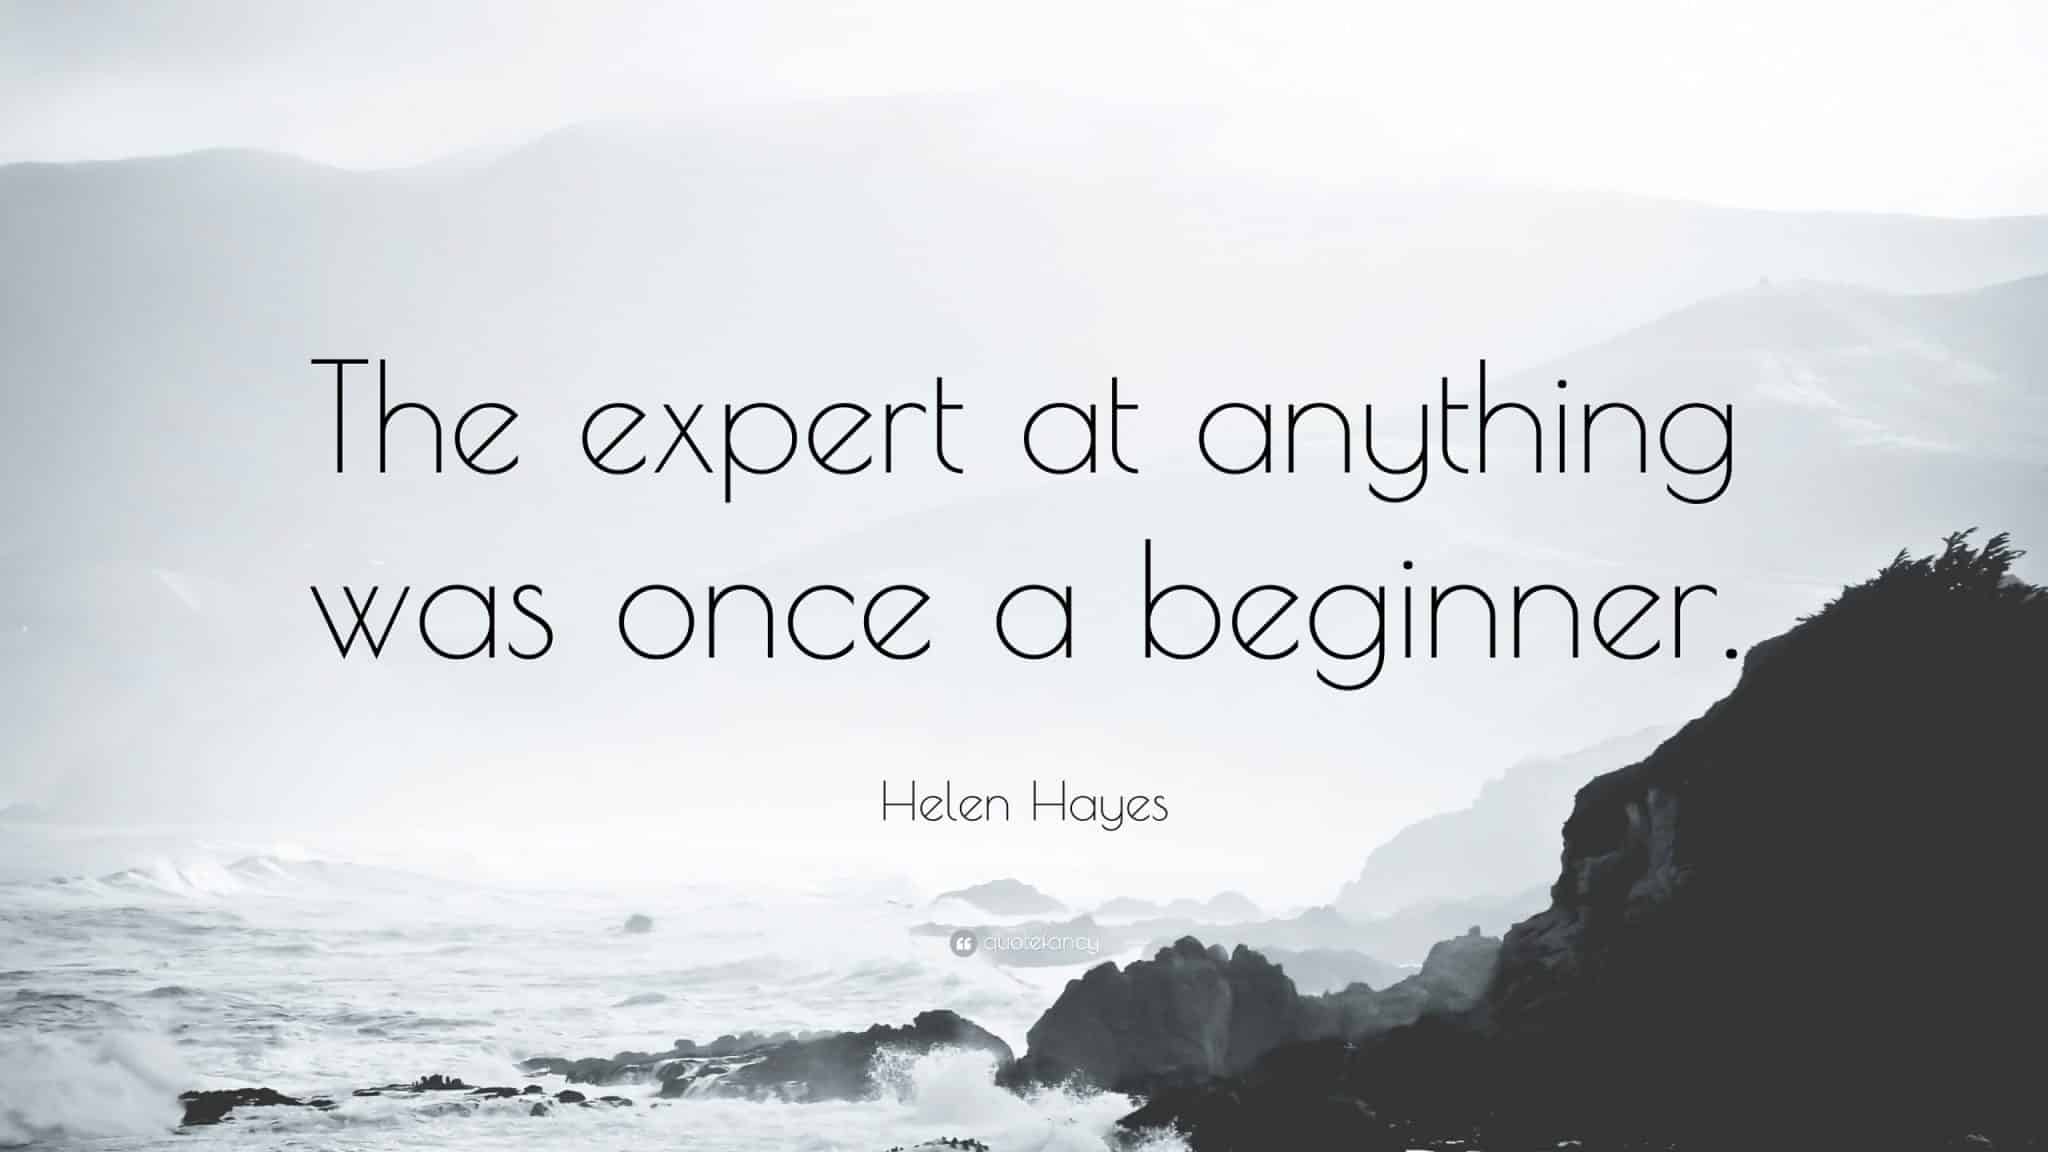 Helen Hayes.